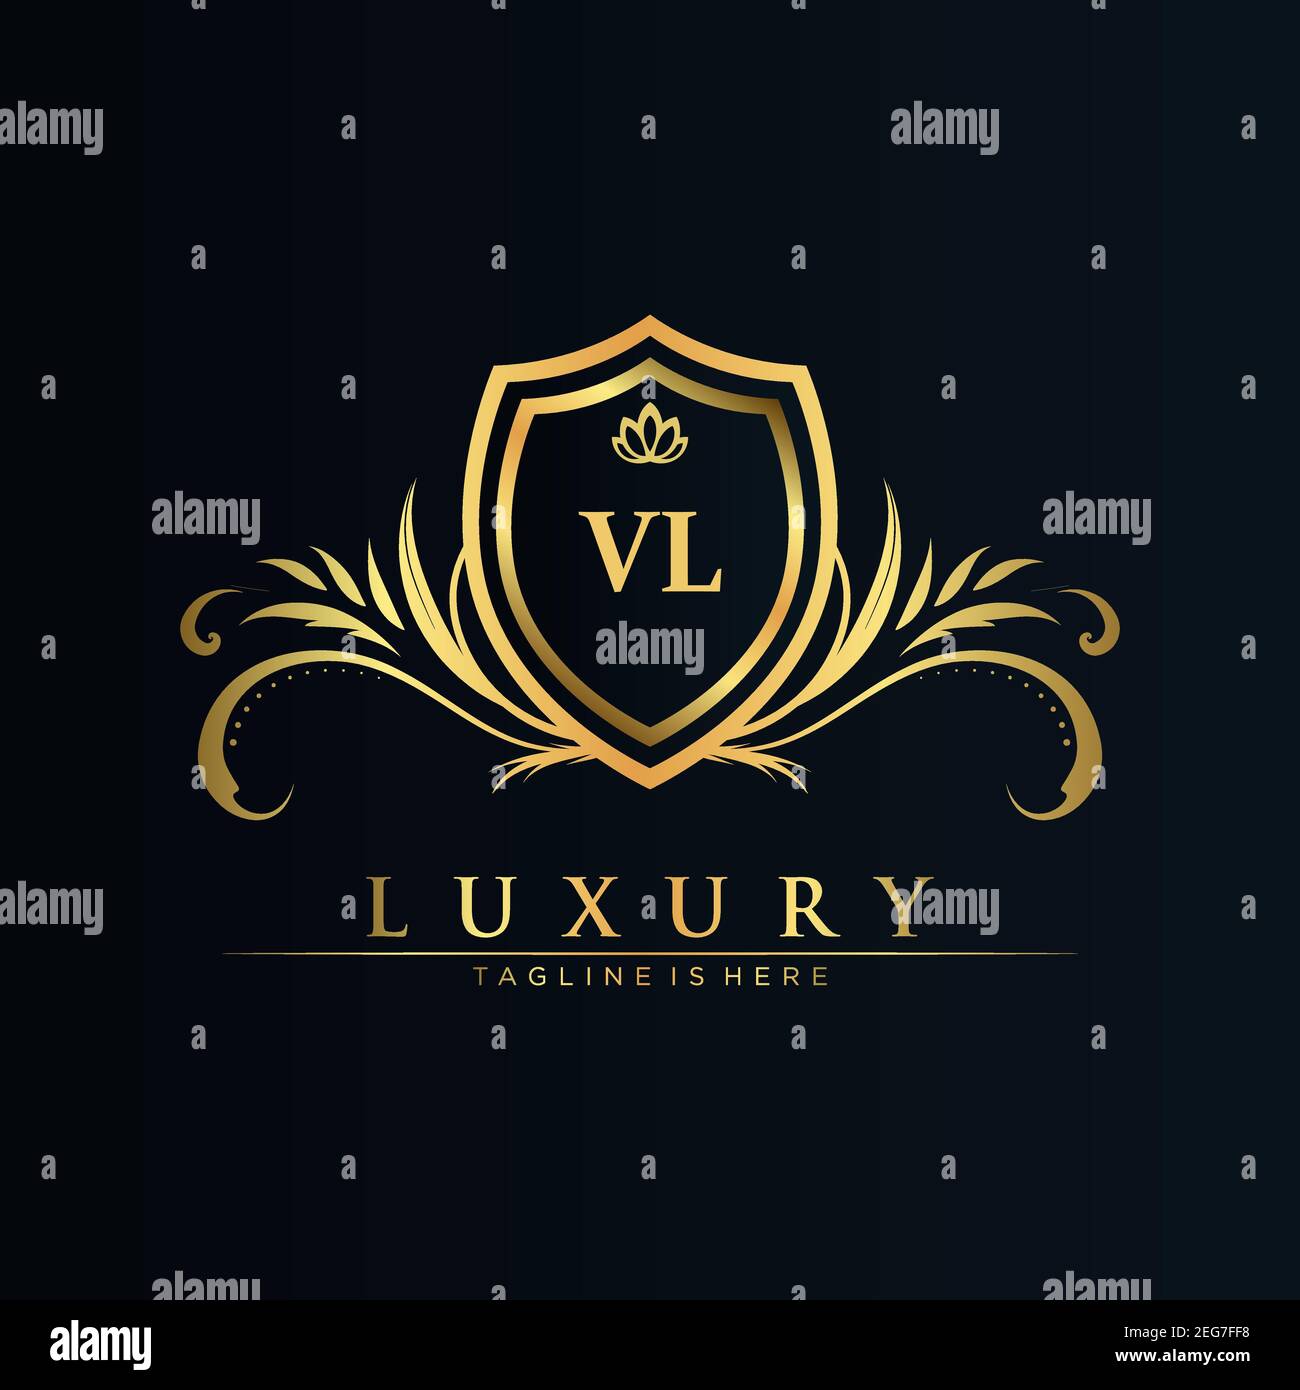 Profesional Letter VL Logo for Real Estate - UpLabs